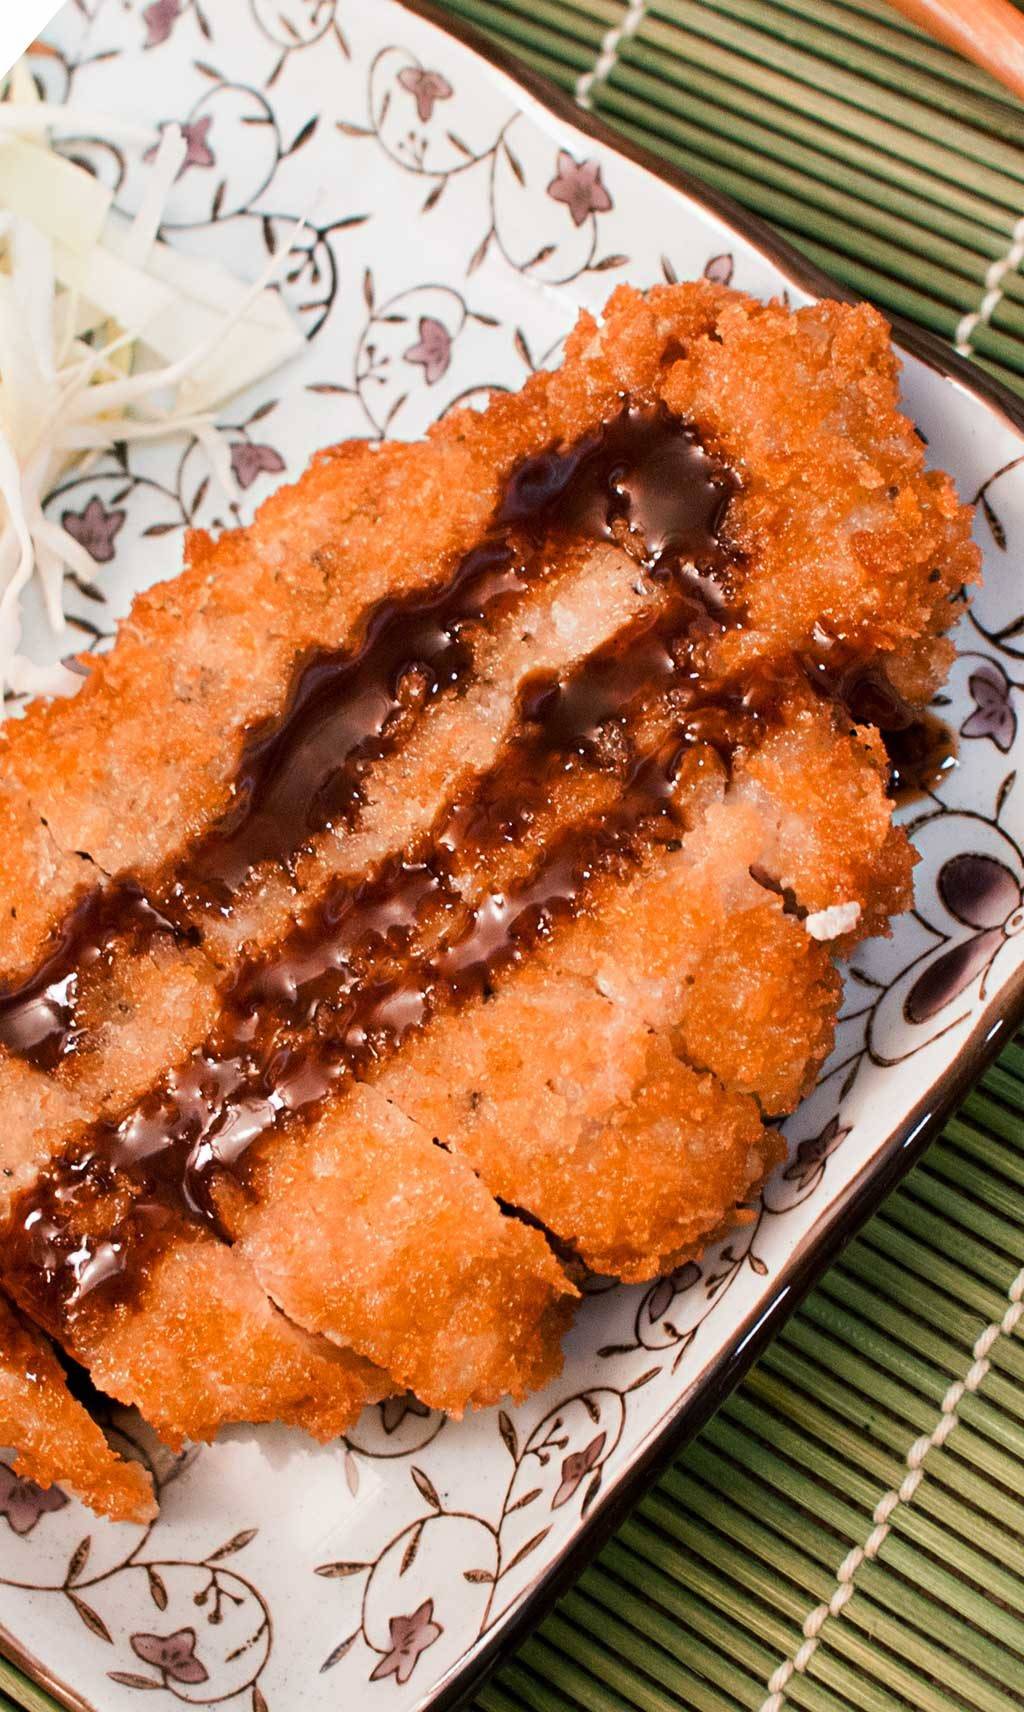 Tonkatsu - Japanese Fried Pork Cutlets